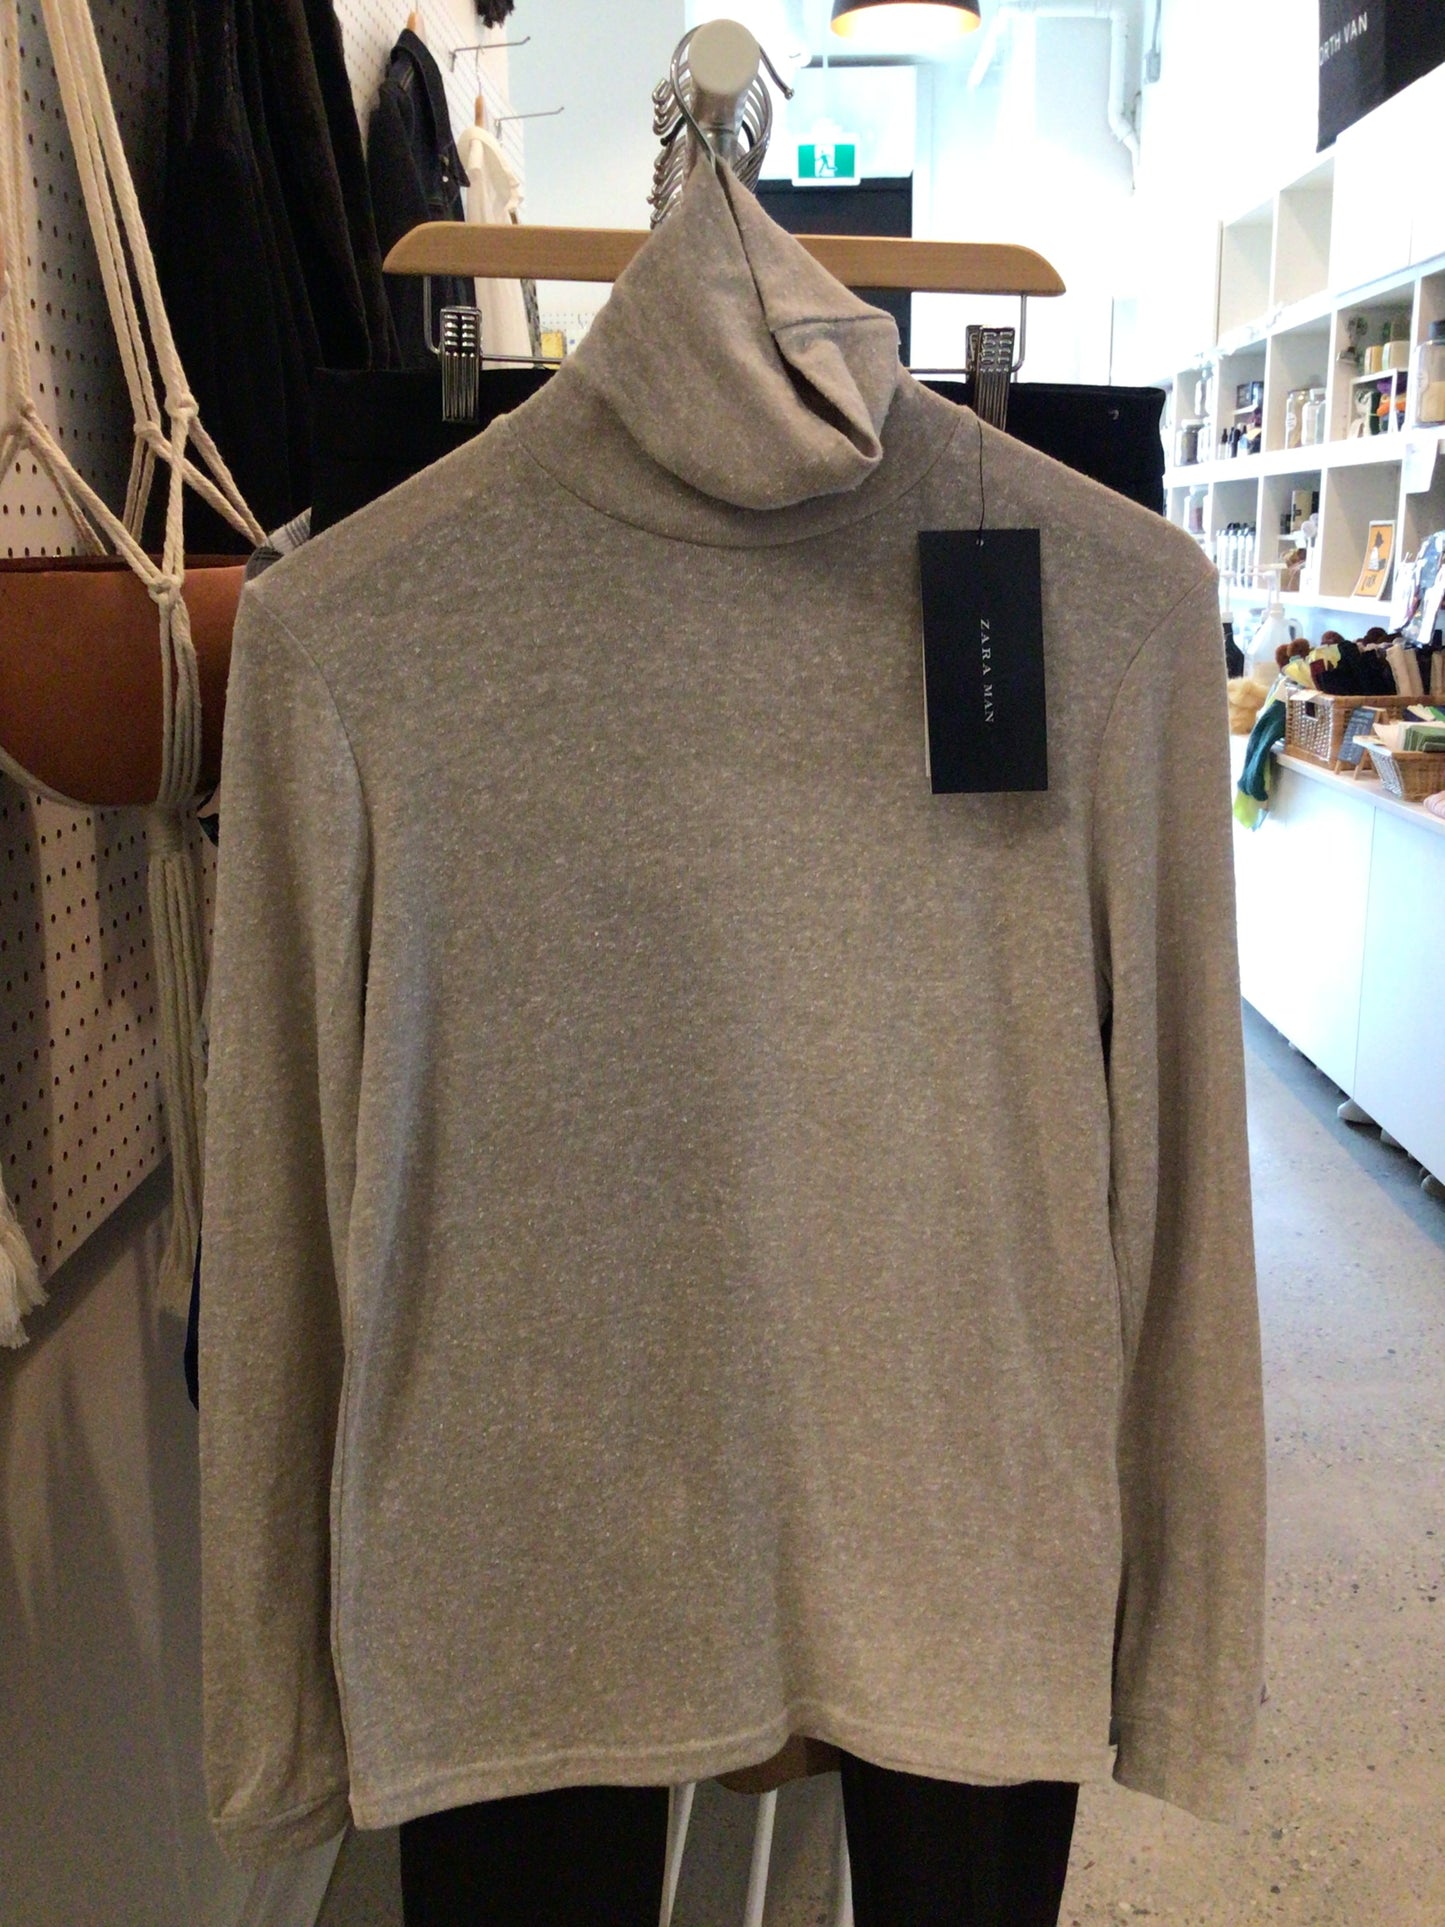 Consignment 4475-08 Zara Man beige turtle neck sweater. Size S.